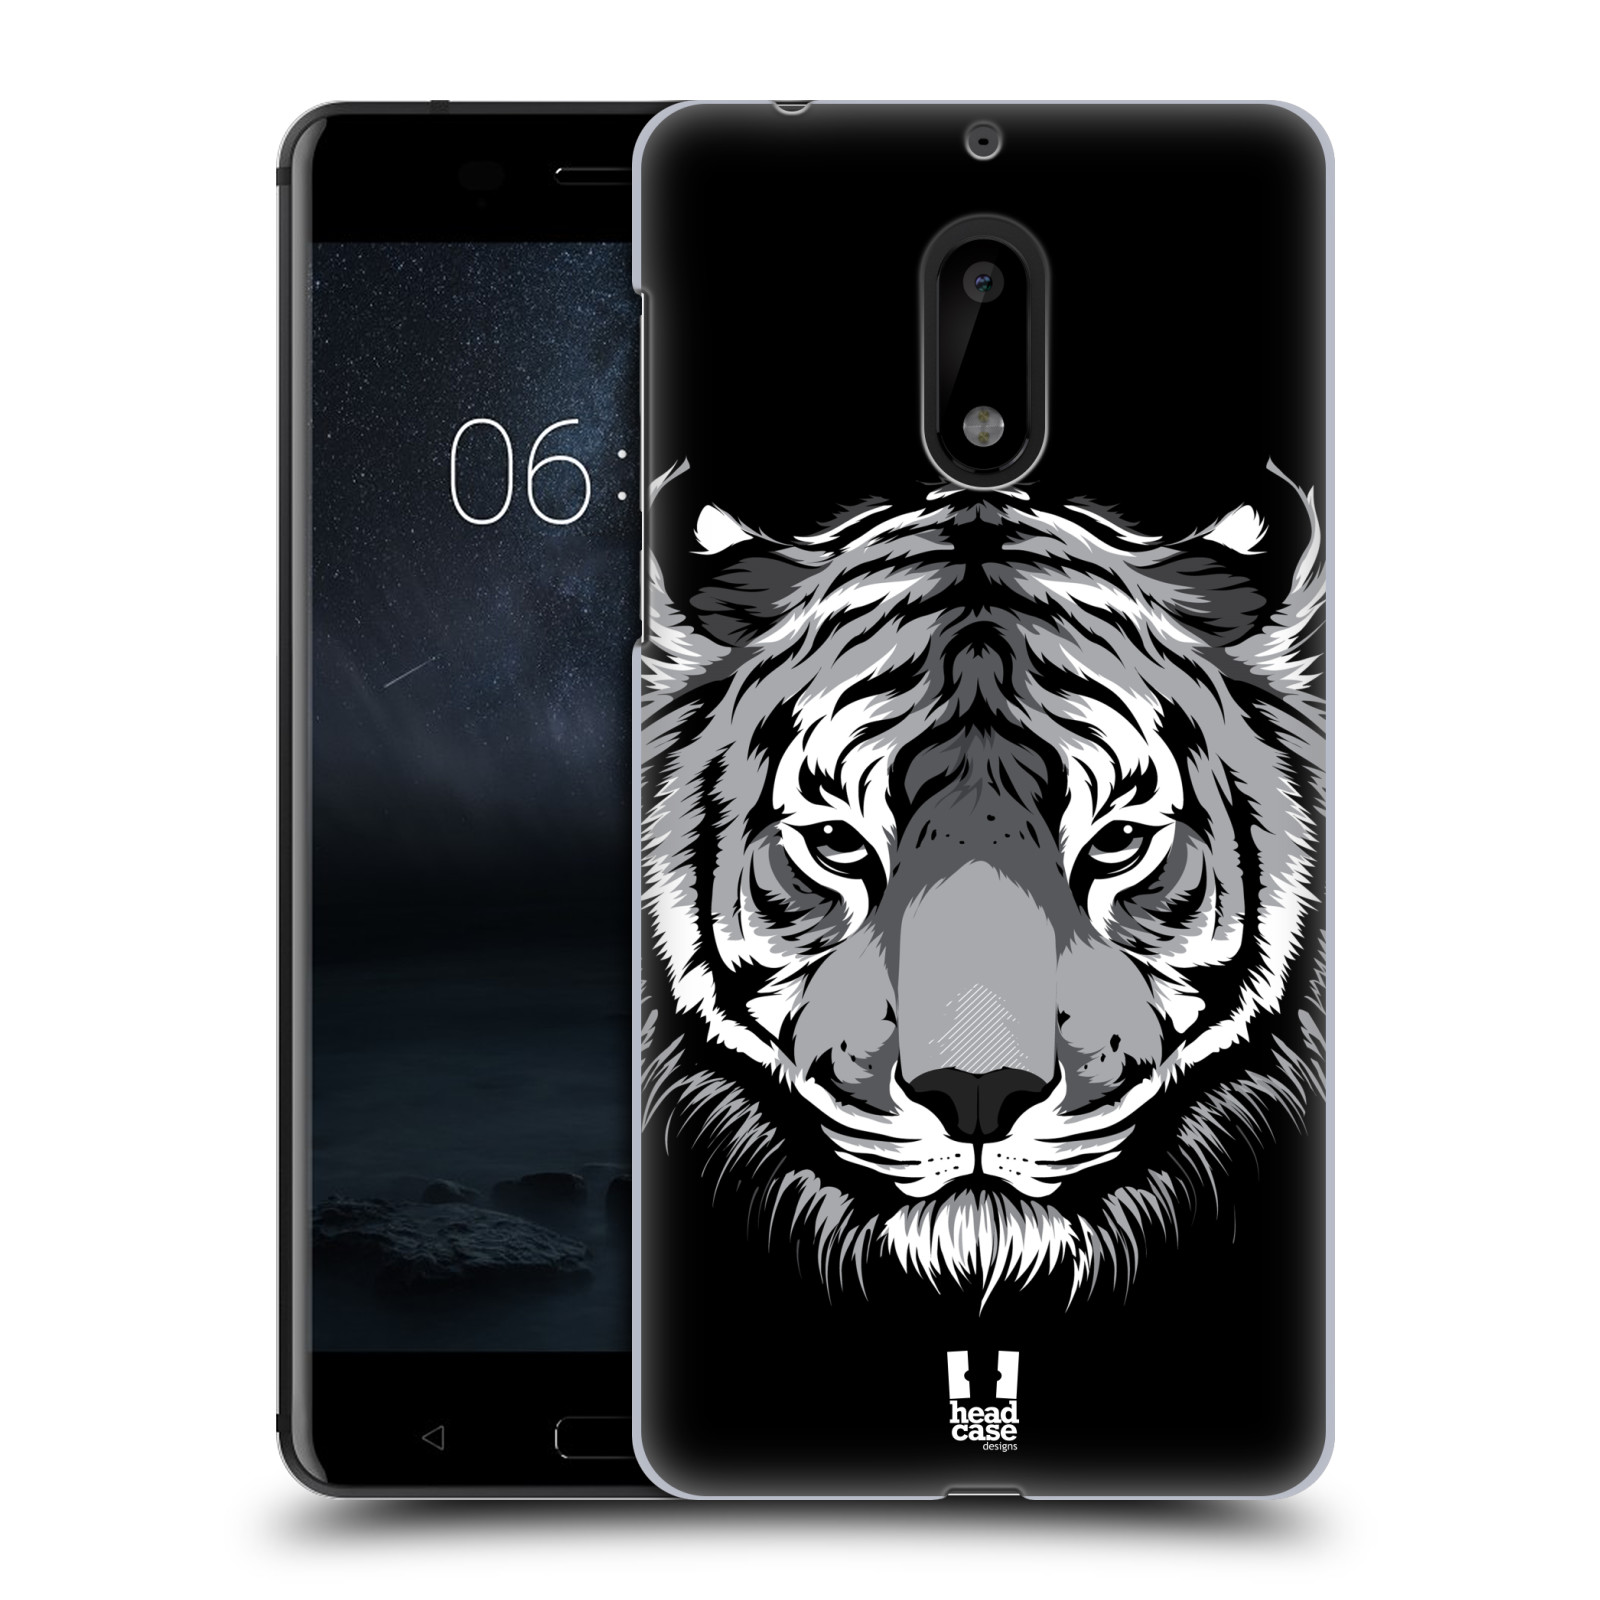 HEAD CASE plastový obal na mobil Nokia 6 vzor Zvíře kreslená tvář 2 tygr